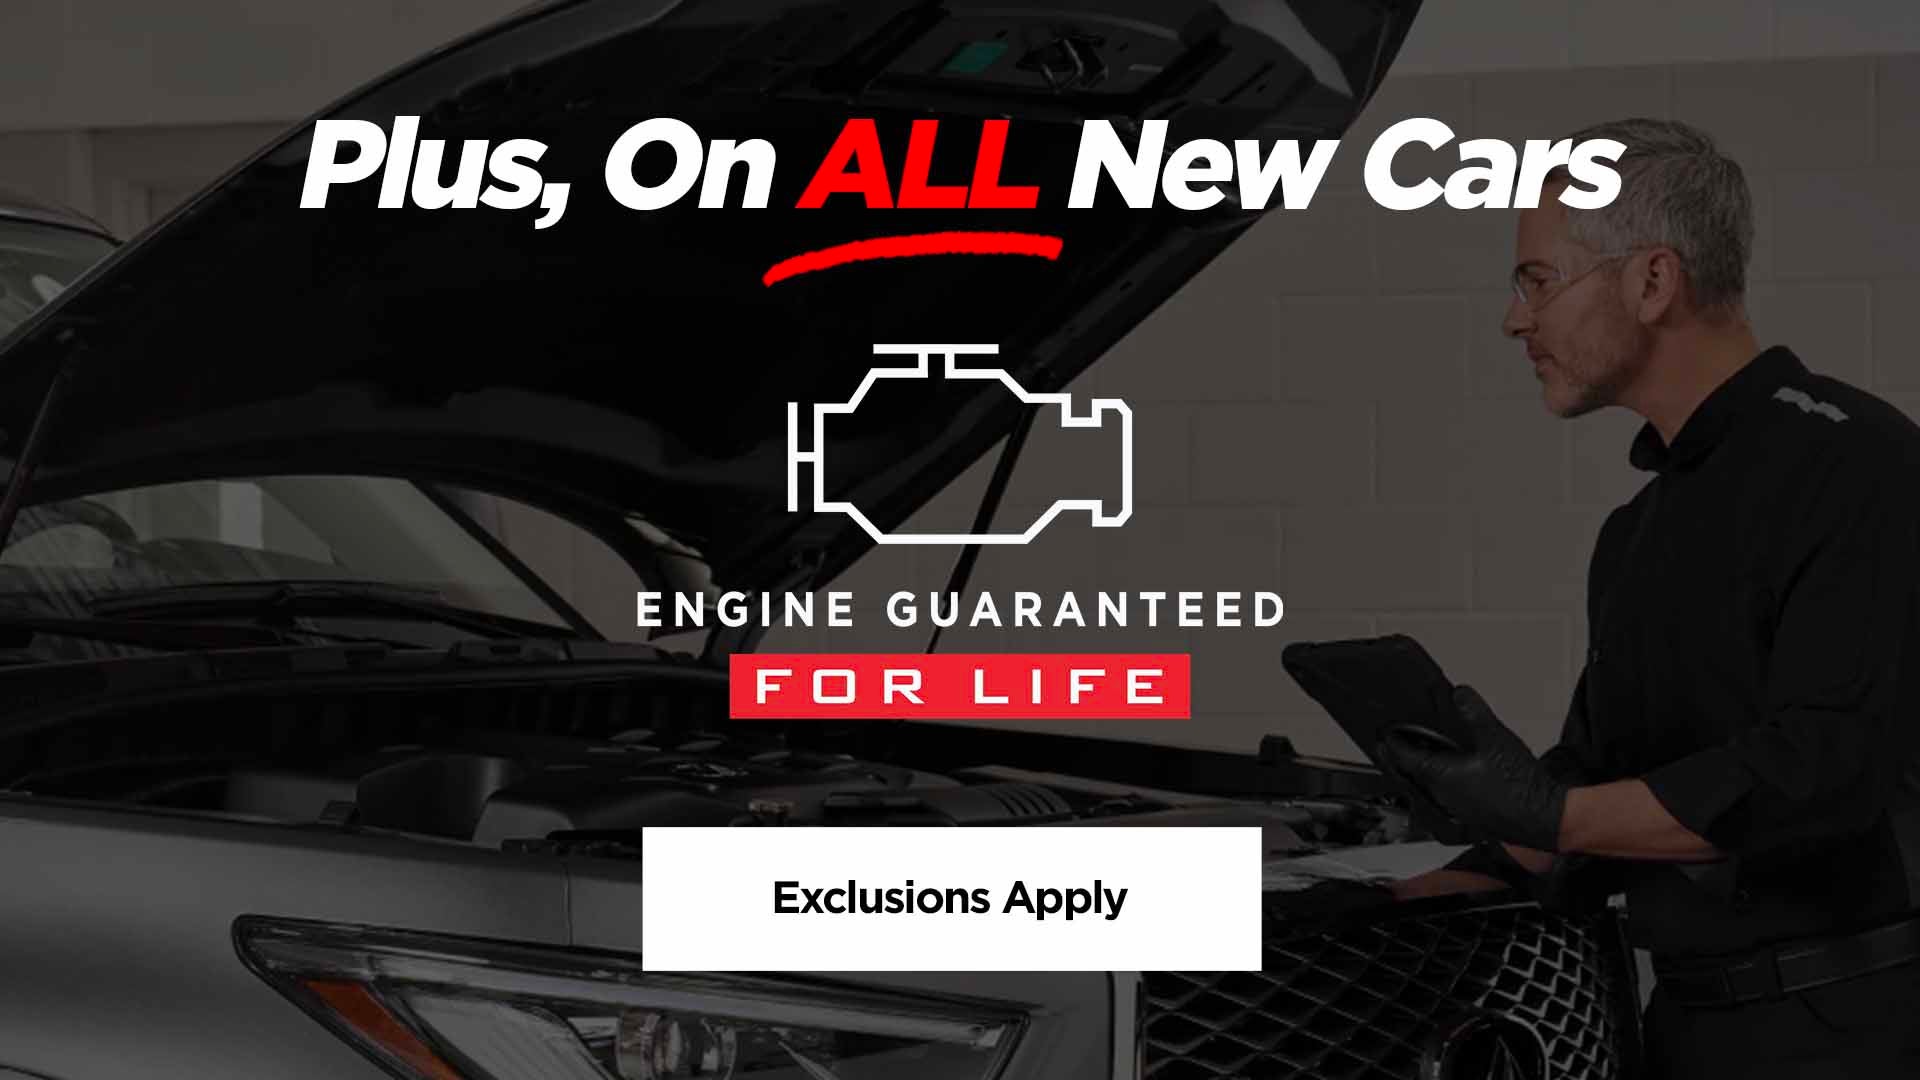 Priority INFINITI in Chesapeake VA, Engine Guaranteed on All New Cars*